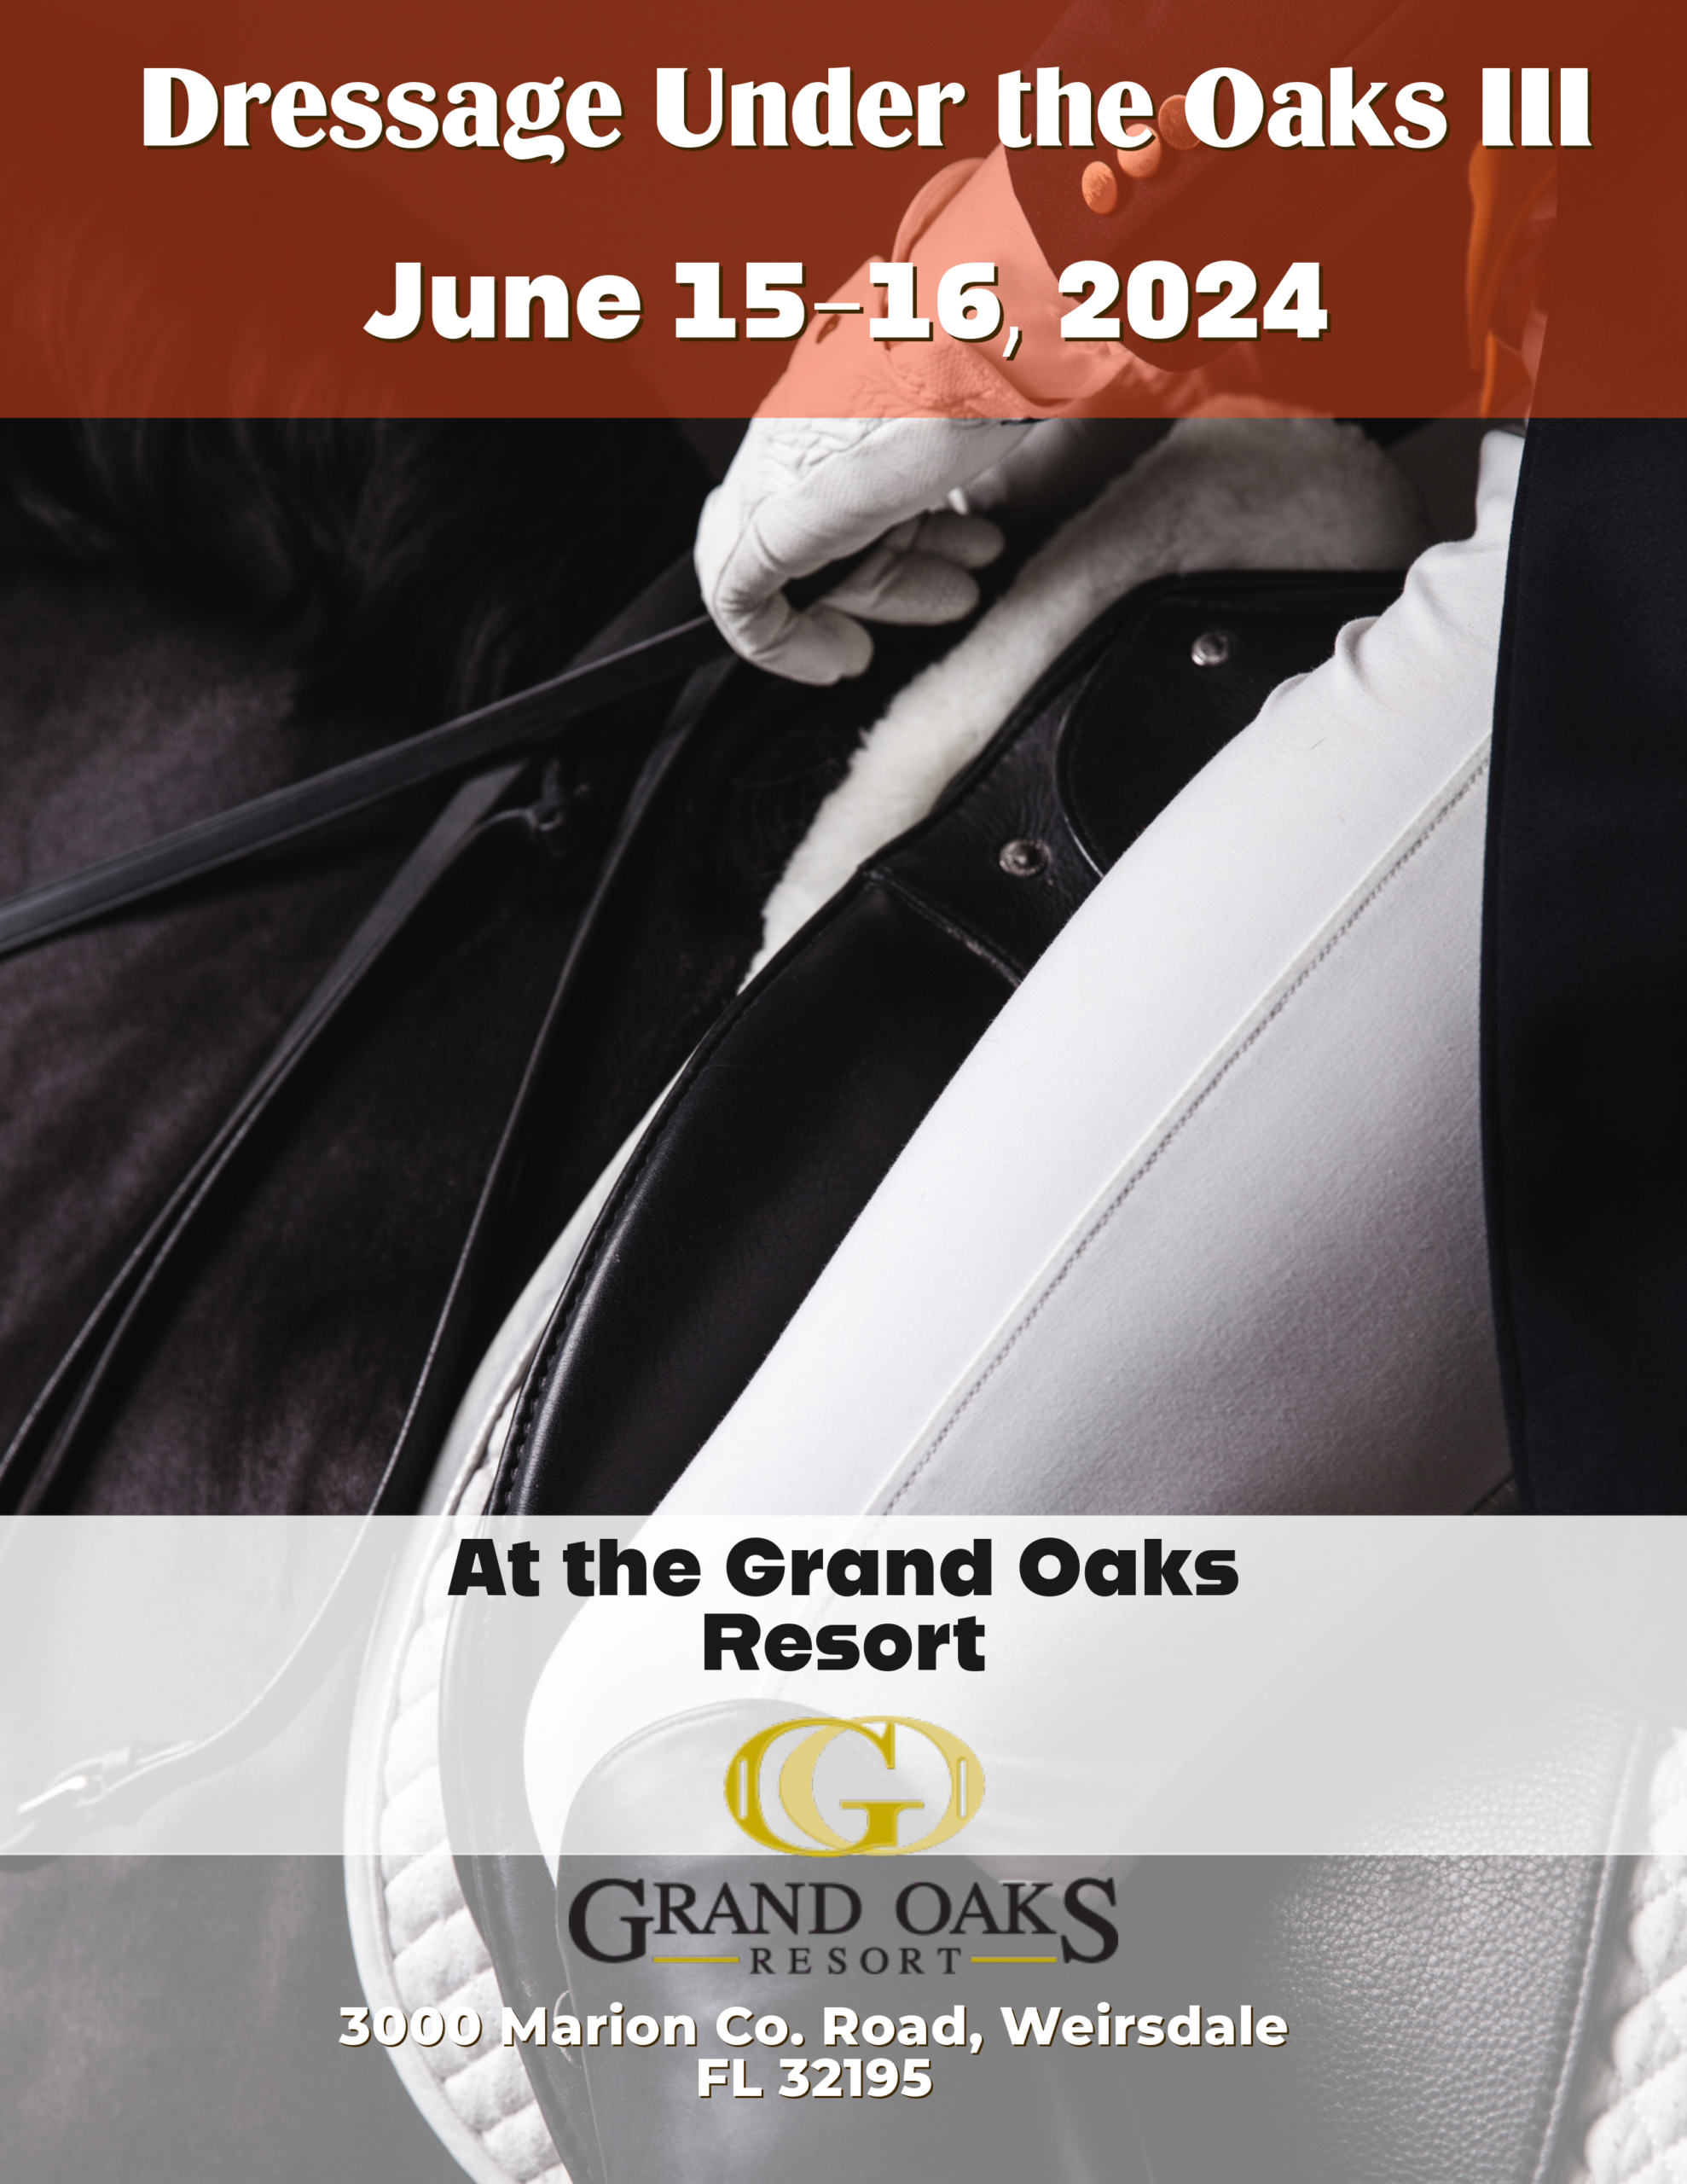 Orlando Dressage at the Grand Oaks Resort